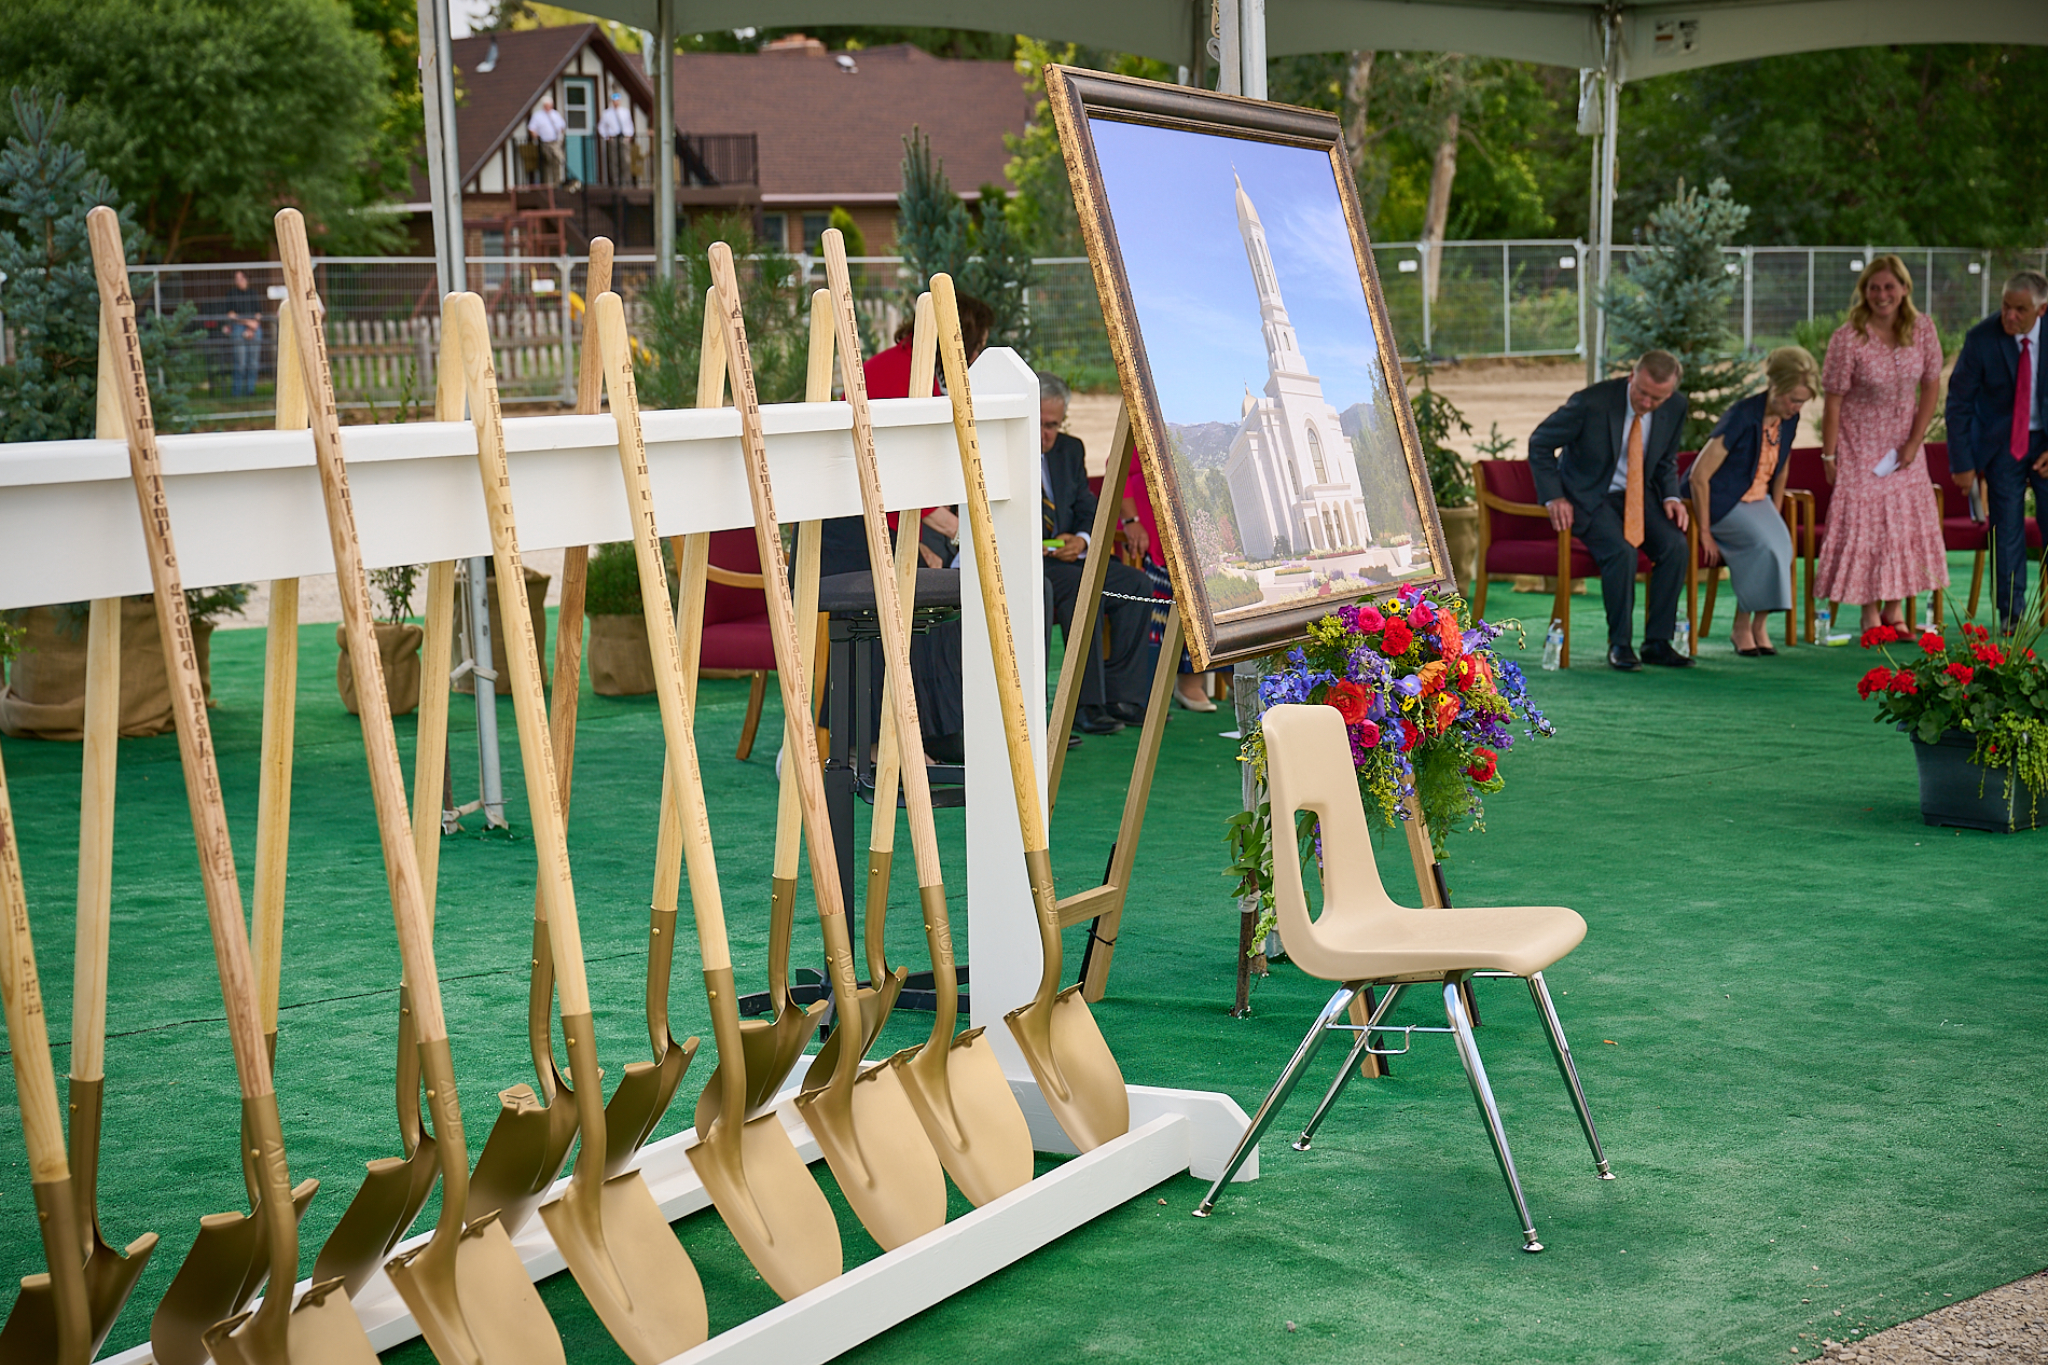 A row of ceremonial golden shovels standing up.